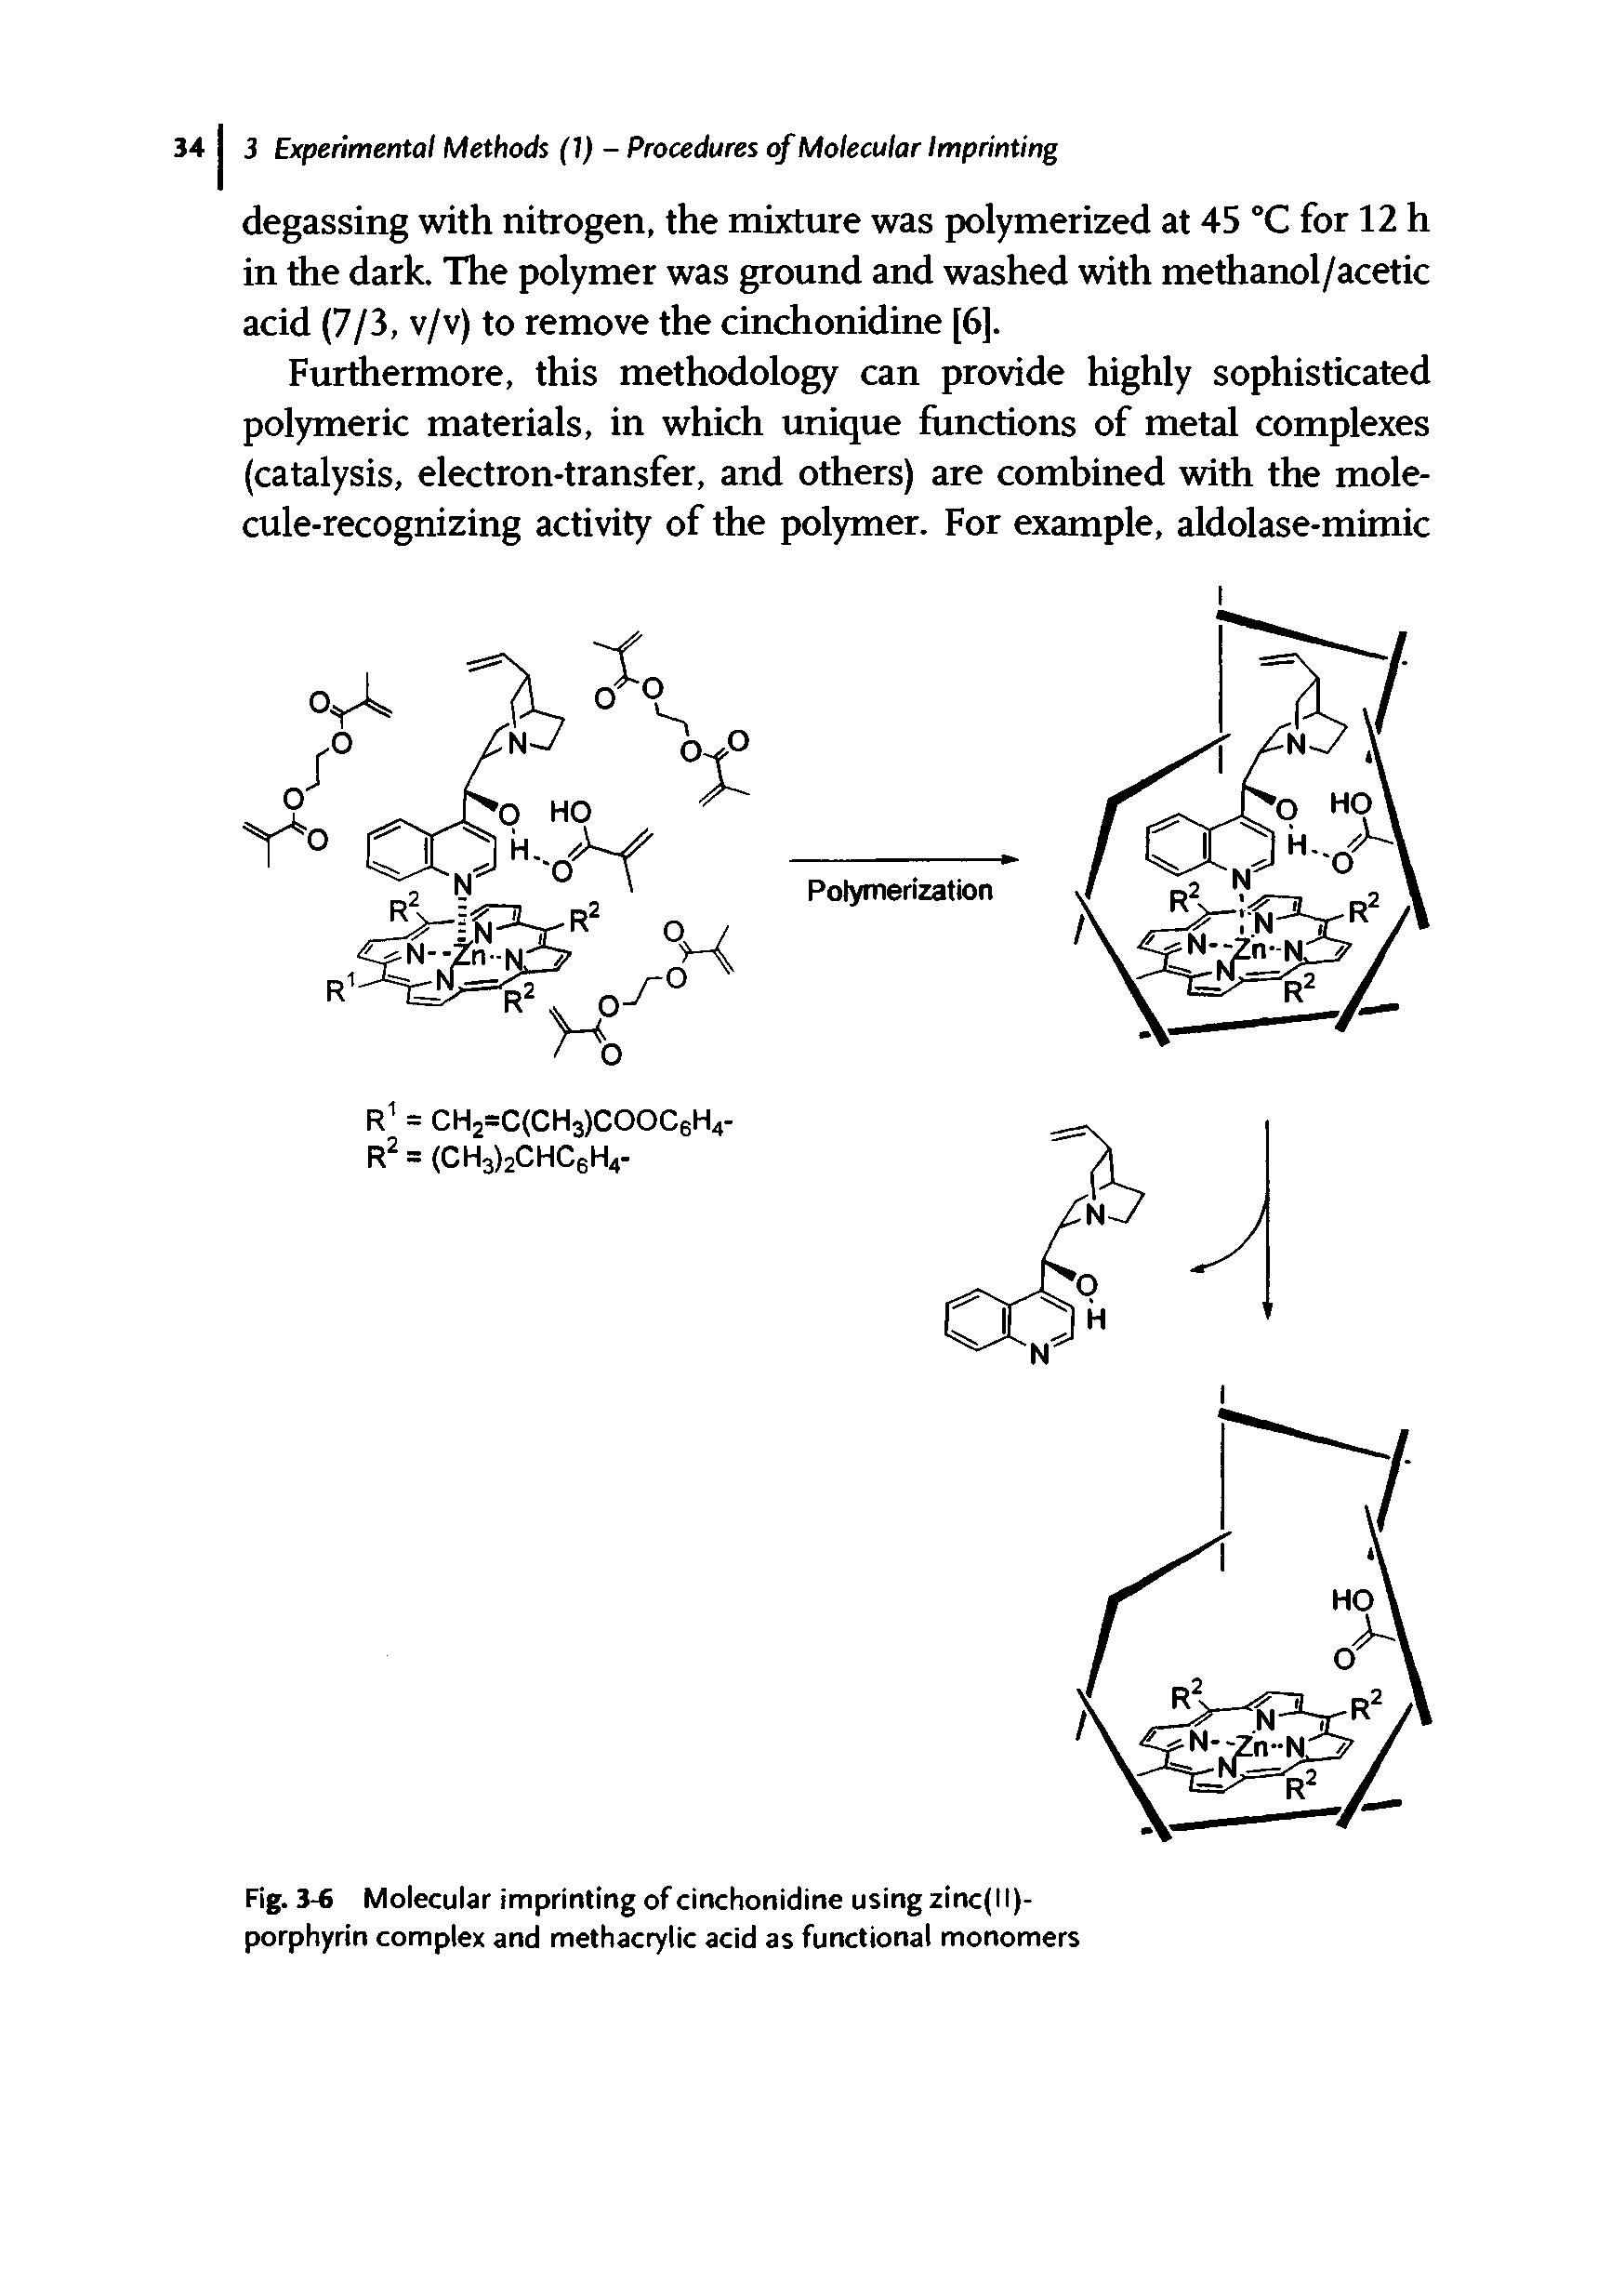 Fig. 34 Molecular imprinting of cinchonidine using zinc(ll)-porphyrin complex and methacrylic acid as functional monomers...